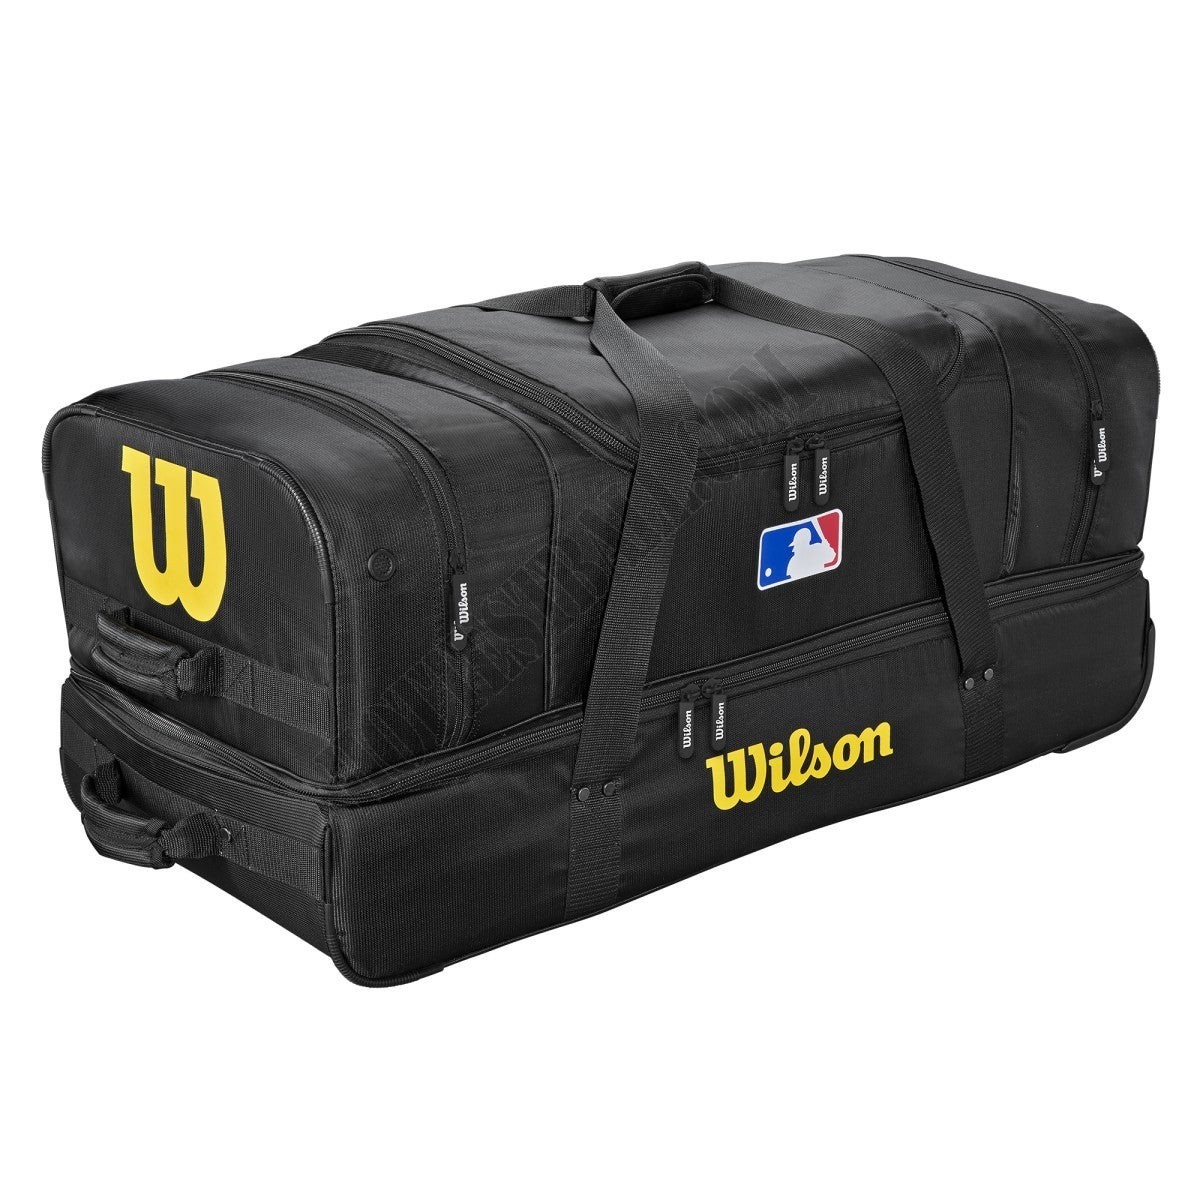 Wilson Umpire Bag - Wilson Discount Store - -0